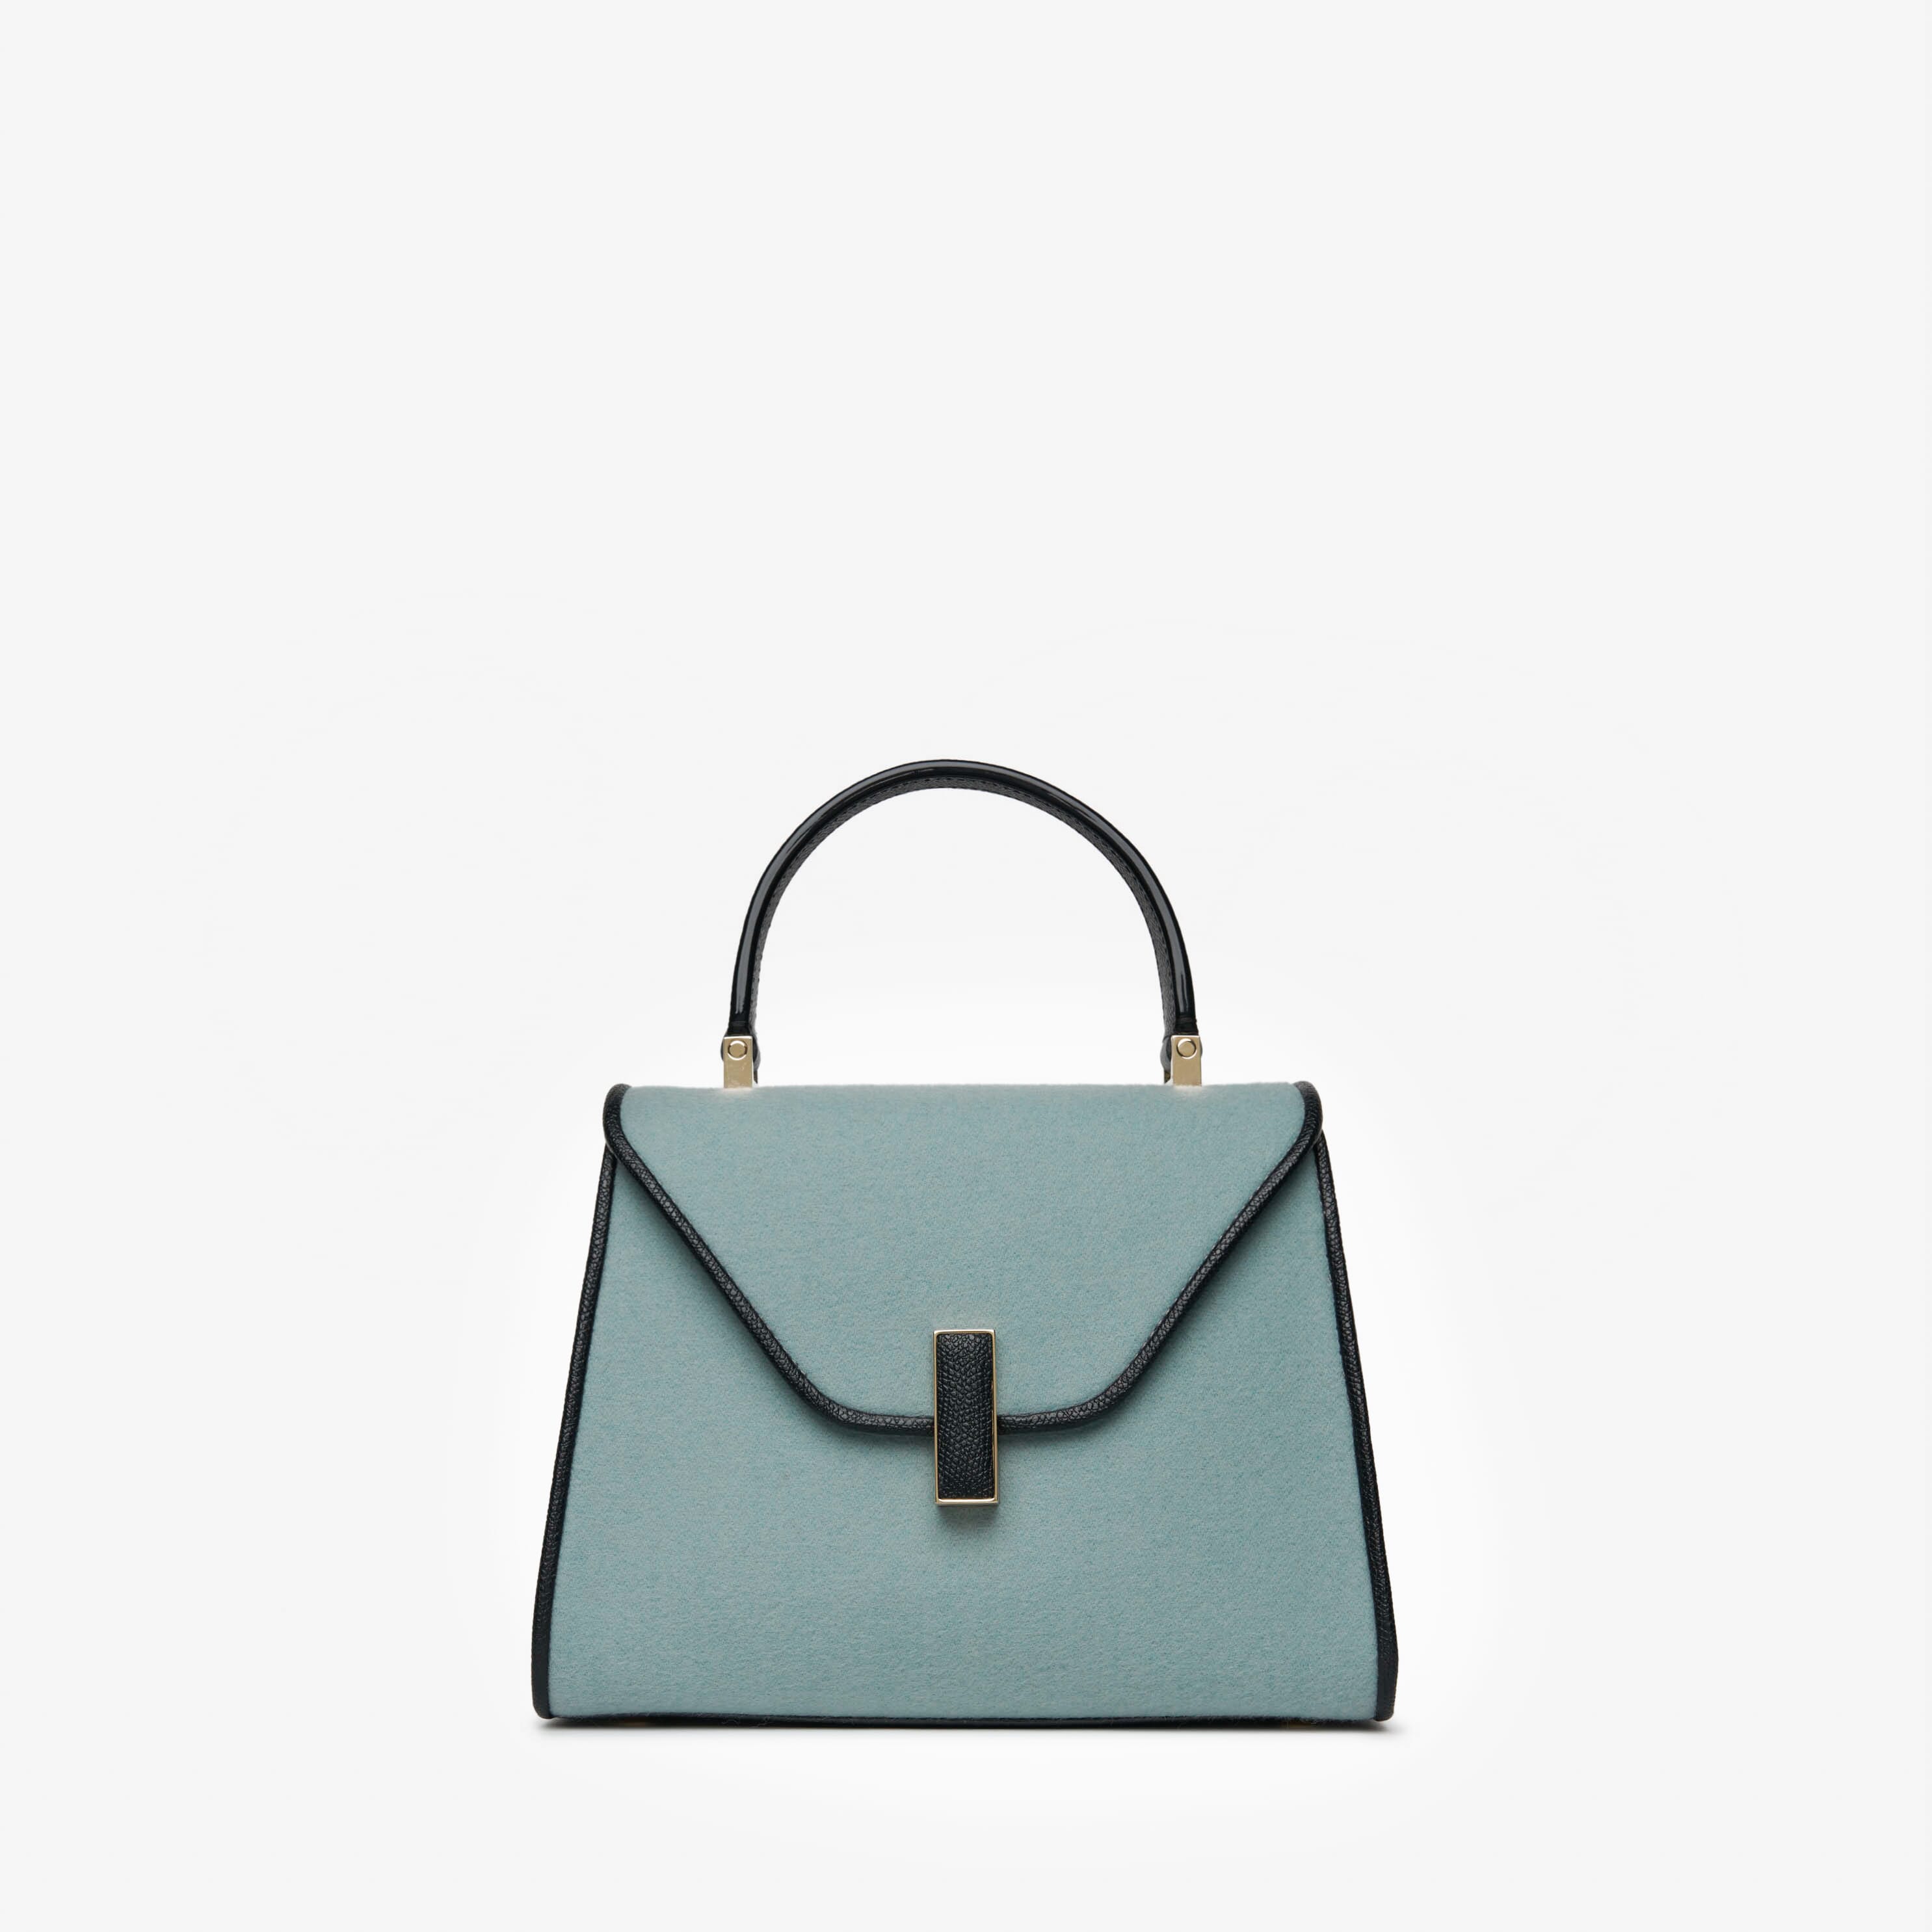 Iside Mini Cashmere Bag - Cornflower Blue/Black/Emerald Green - Lana double/Vitello VS - Valextra - 1